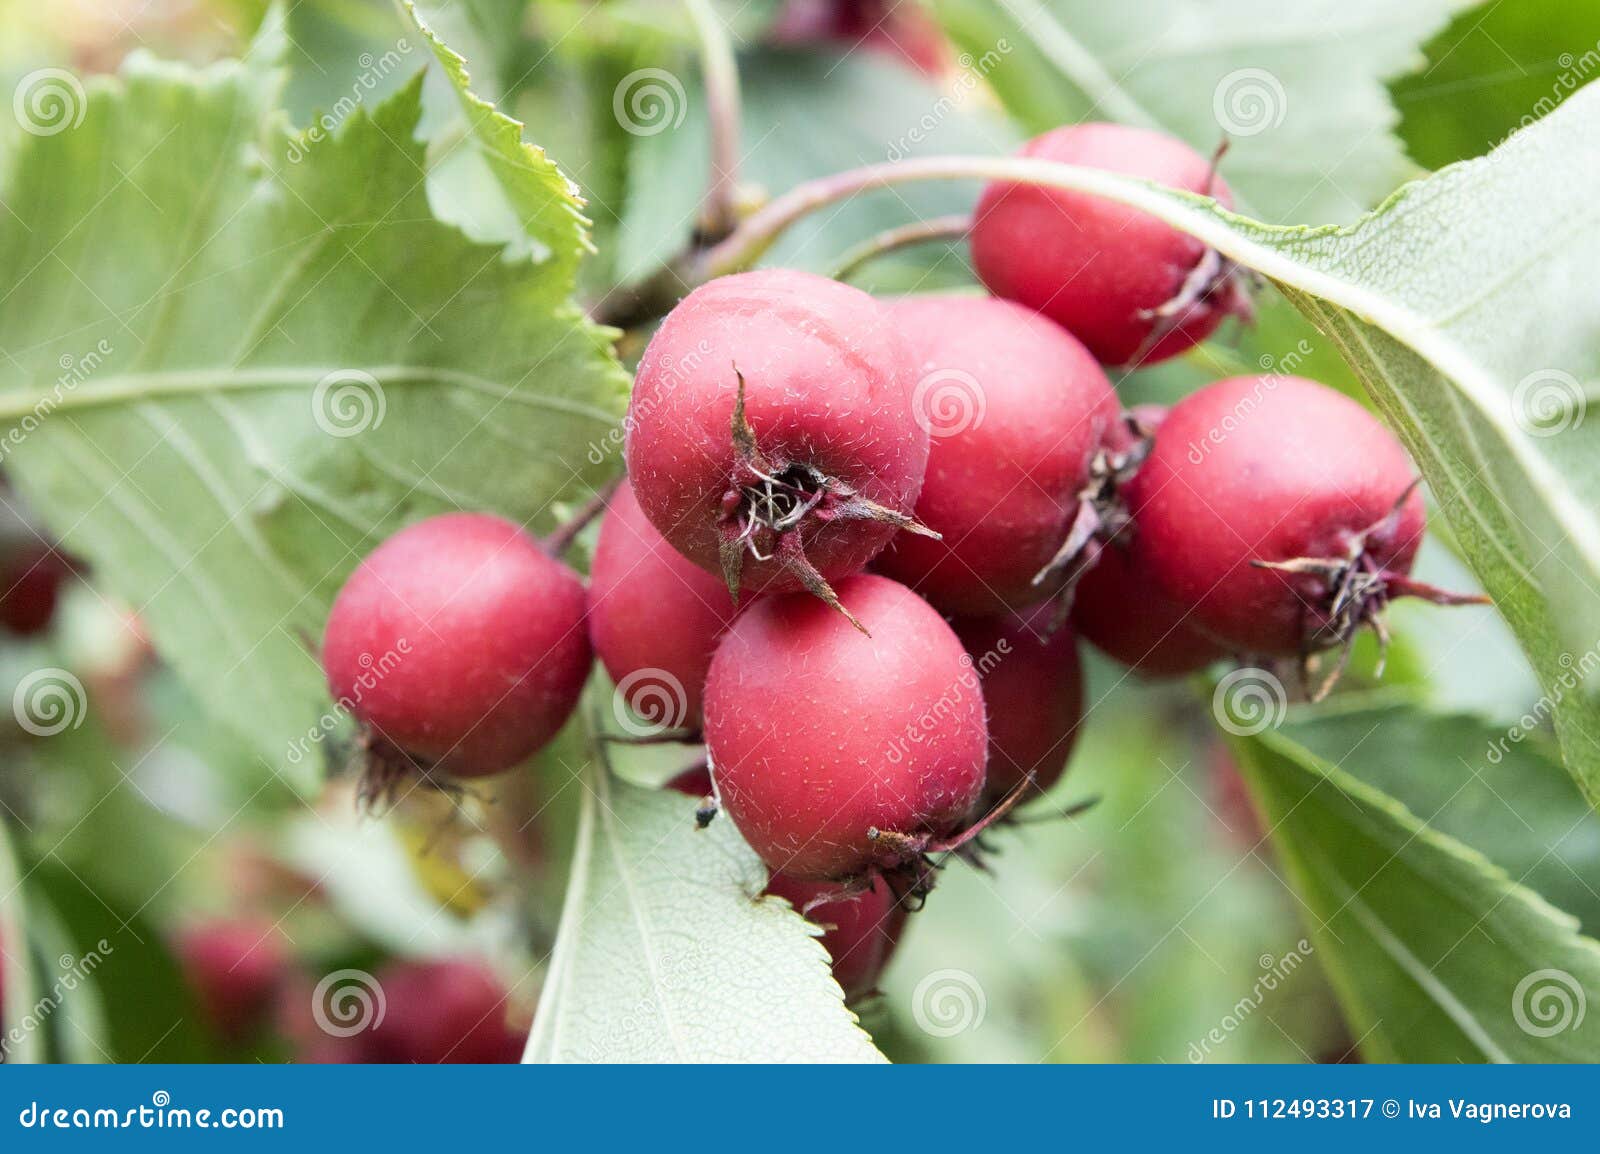 crataegus pinnatifida, chinese haw, chinese hawthorn, chinese hawberry with fruits